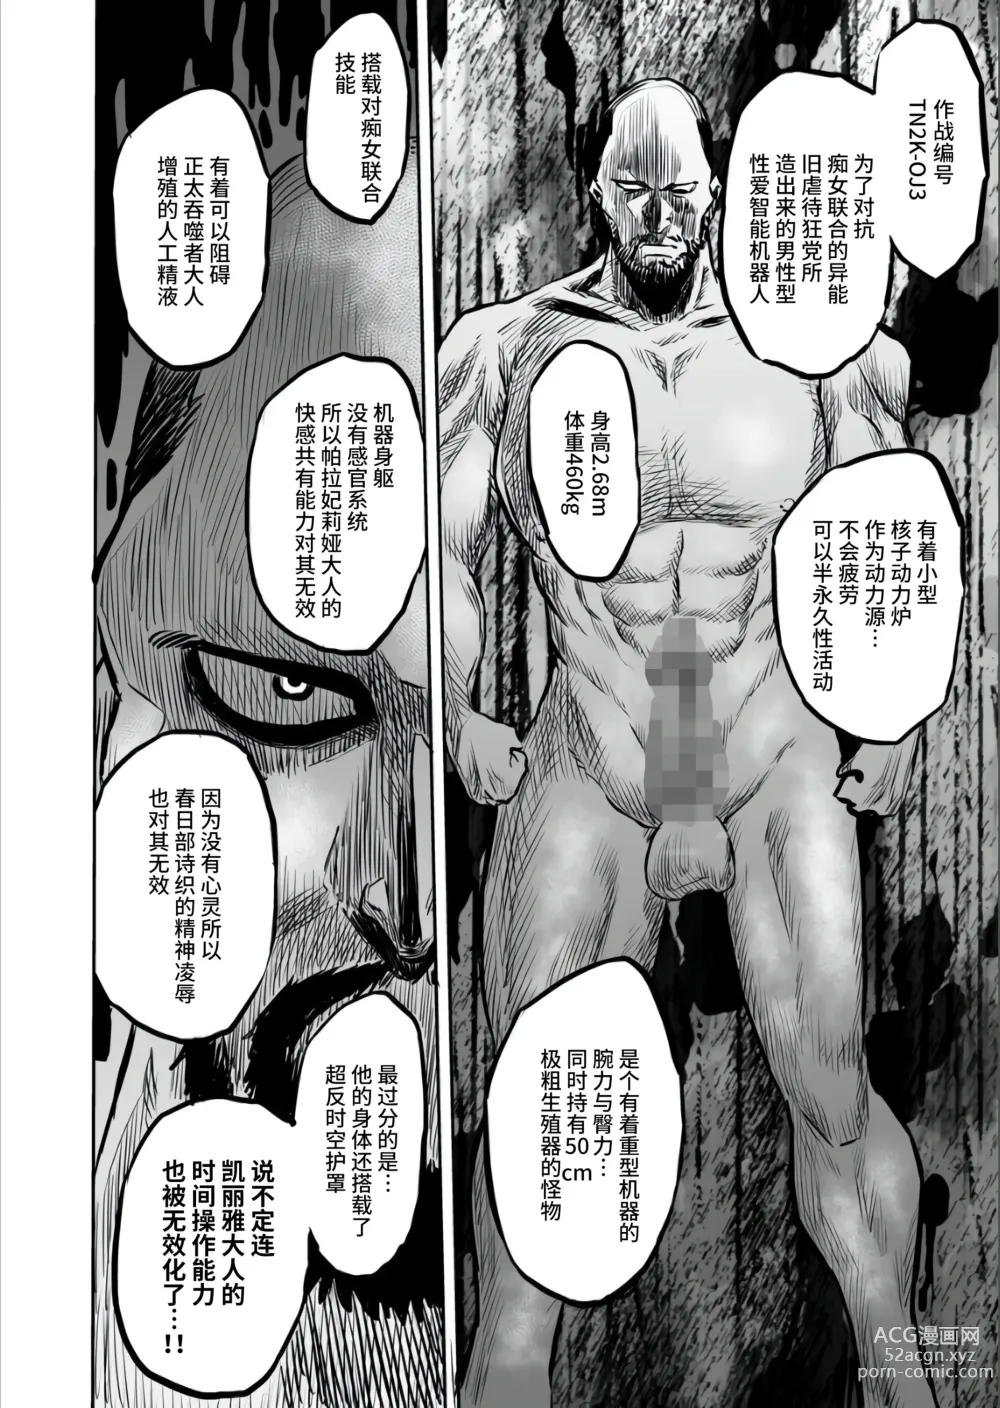 Page 389 of doujinshi 時姦の魔女 合集